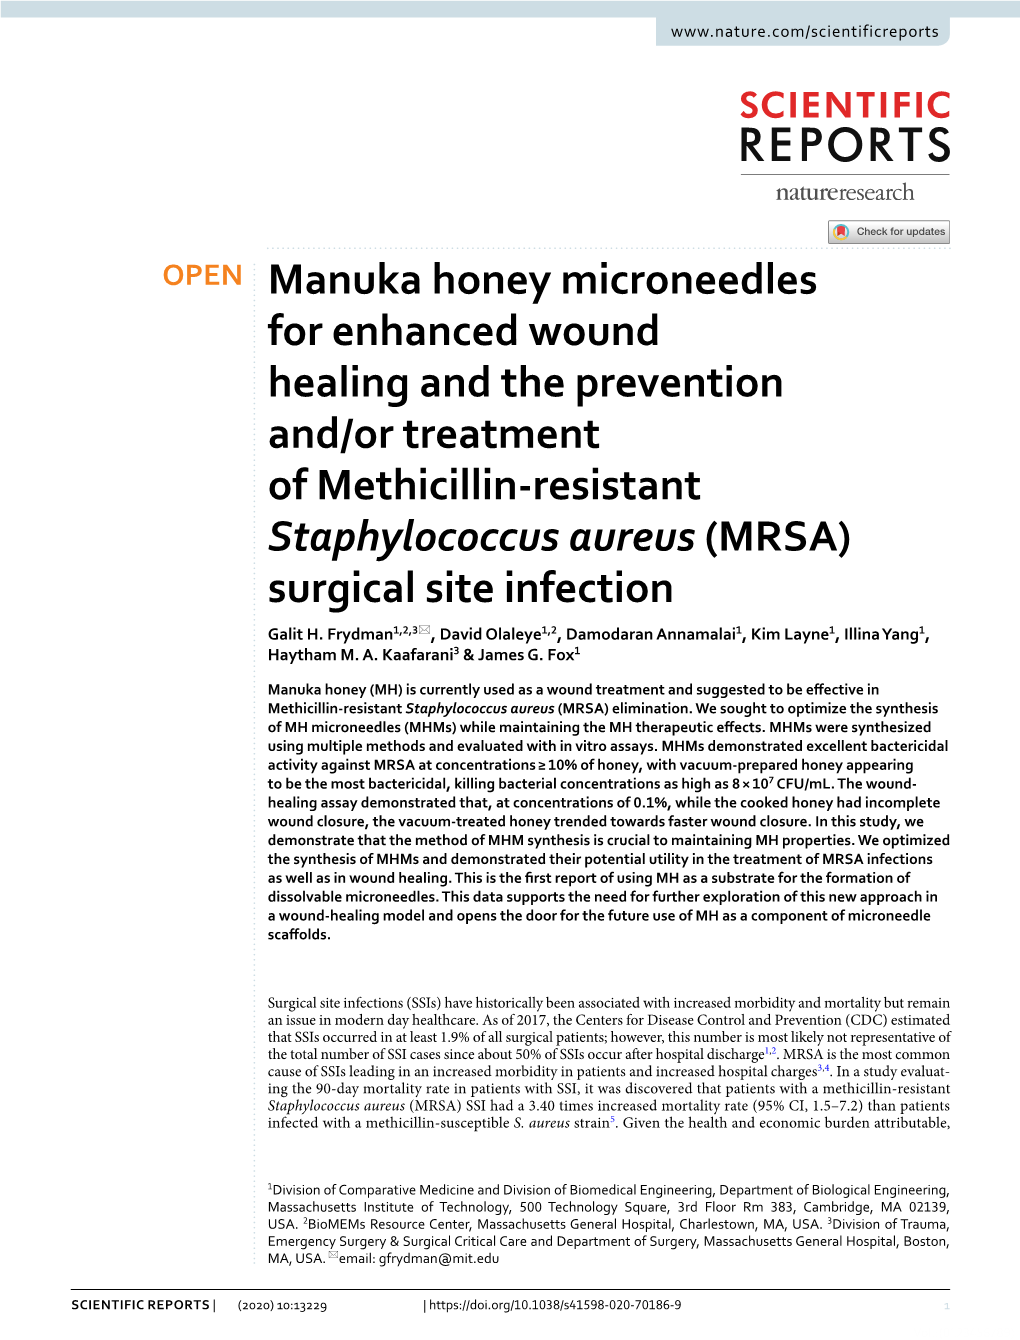 Manuka Honey Microneedles for Enhanced Wound Healing